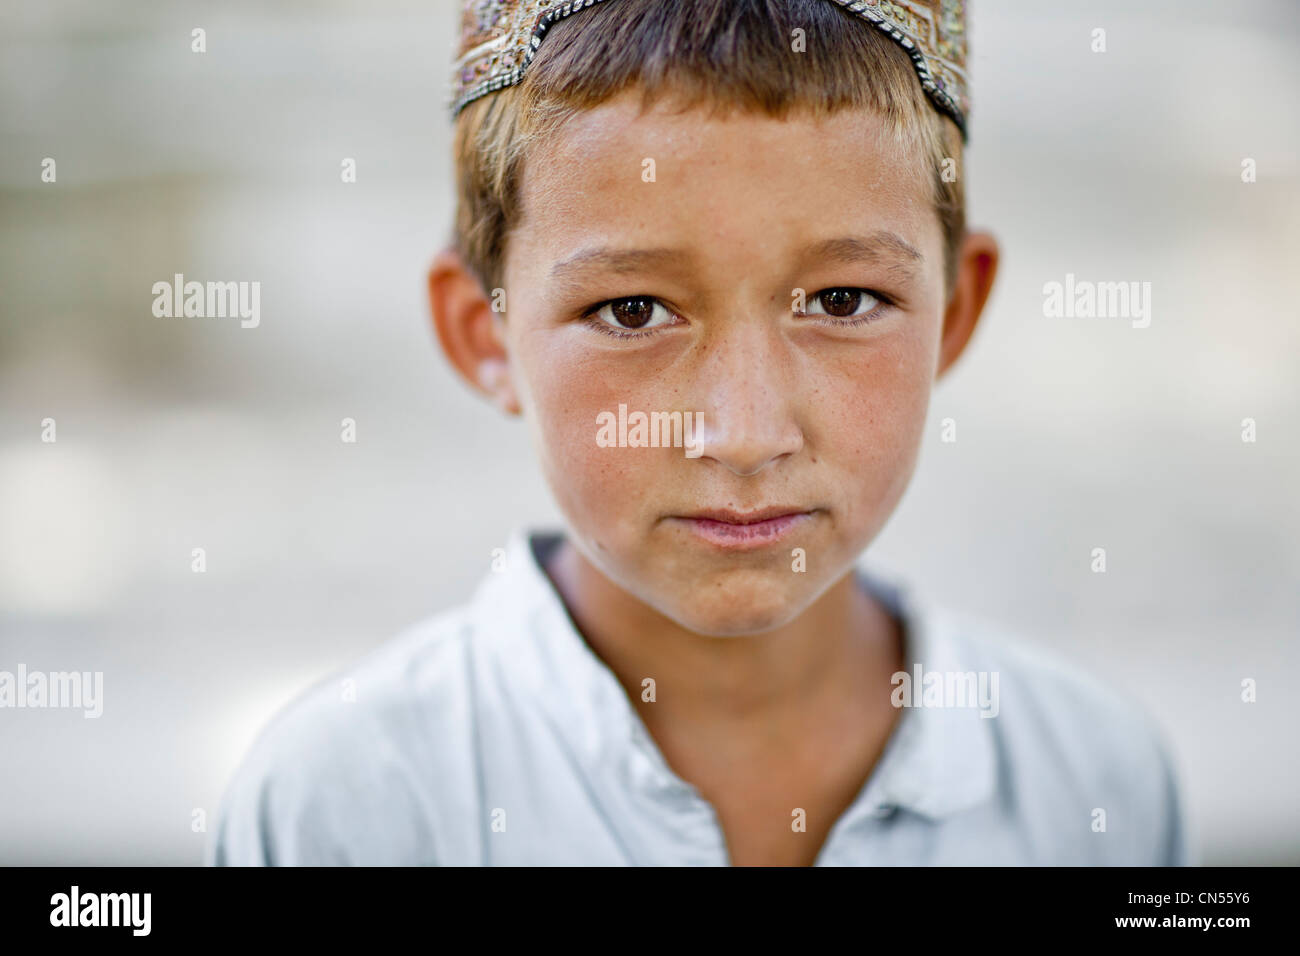 Afghanistan, Balkh province, Balkh, young boy of Tajik origin Stock Photo